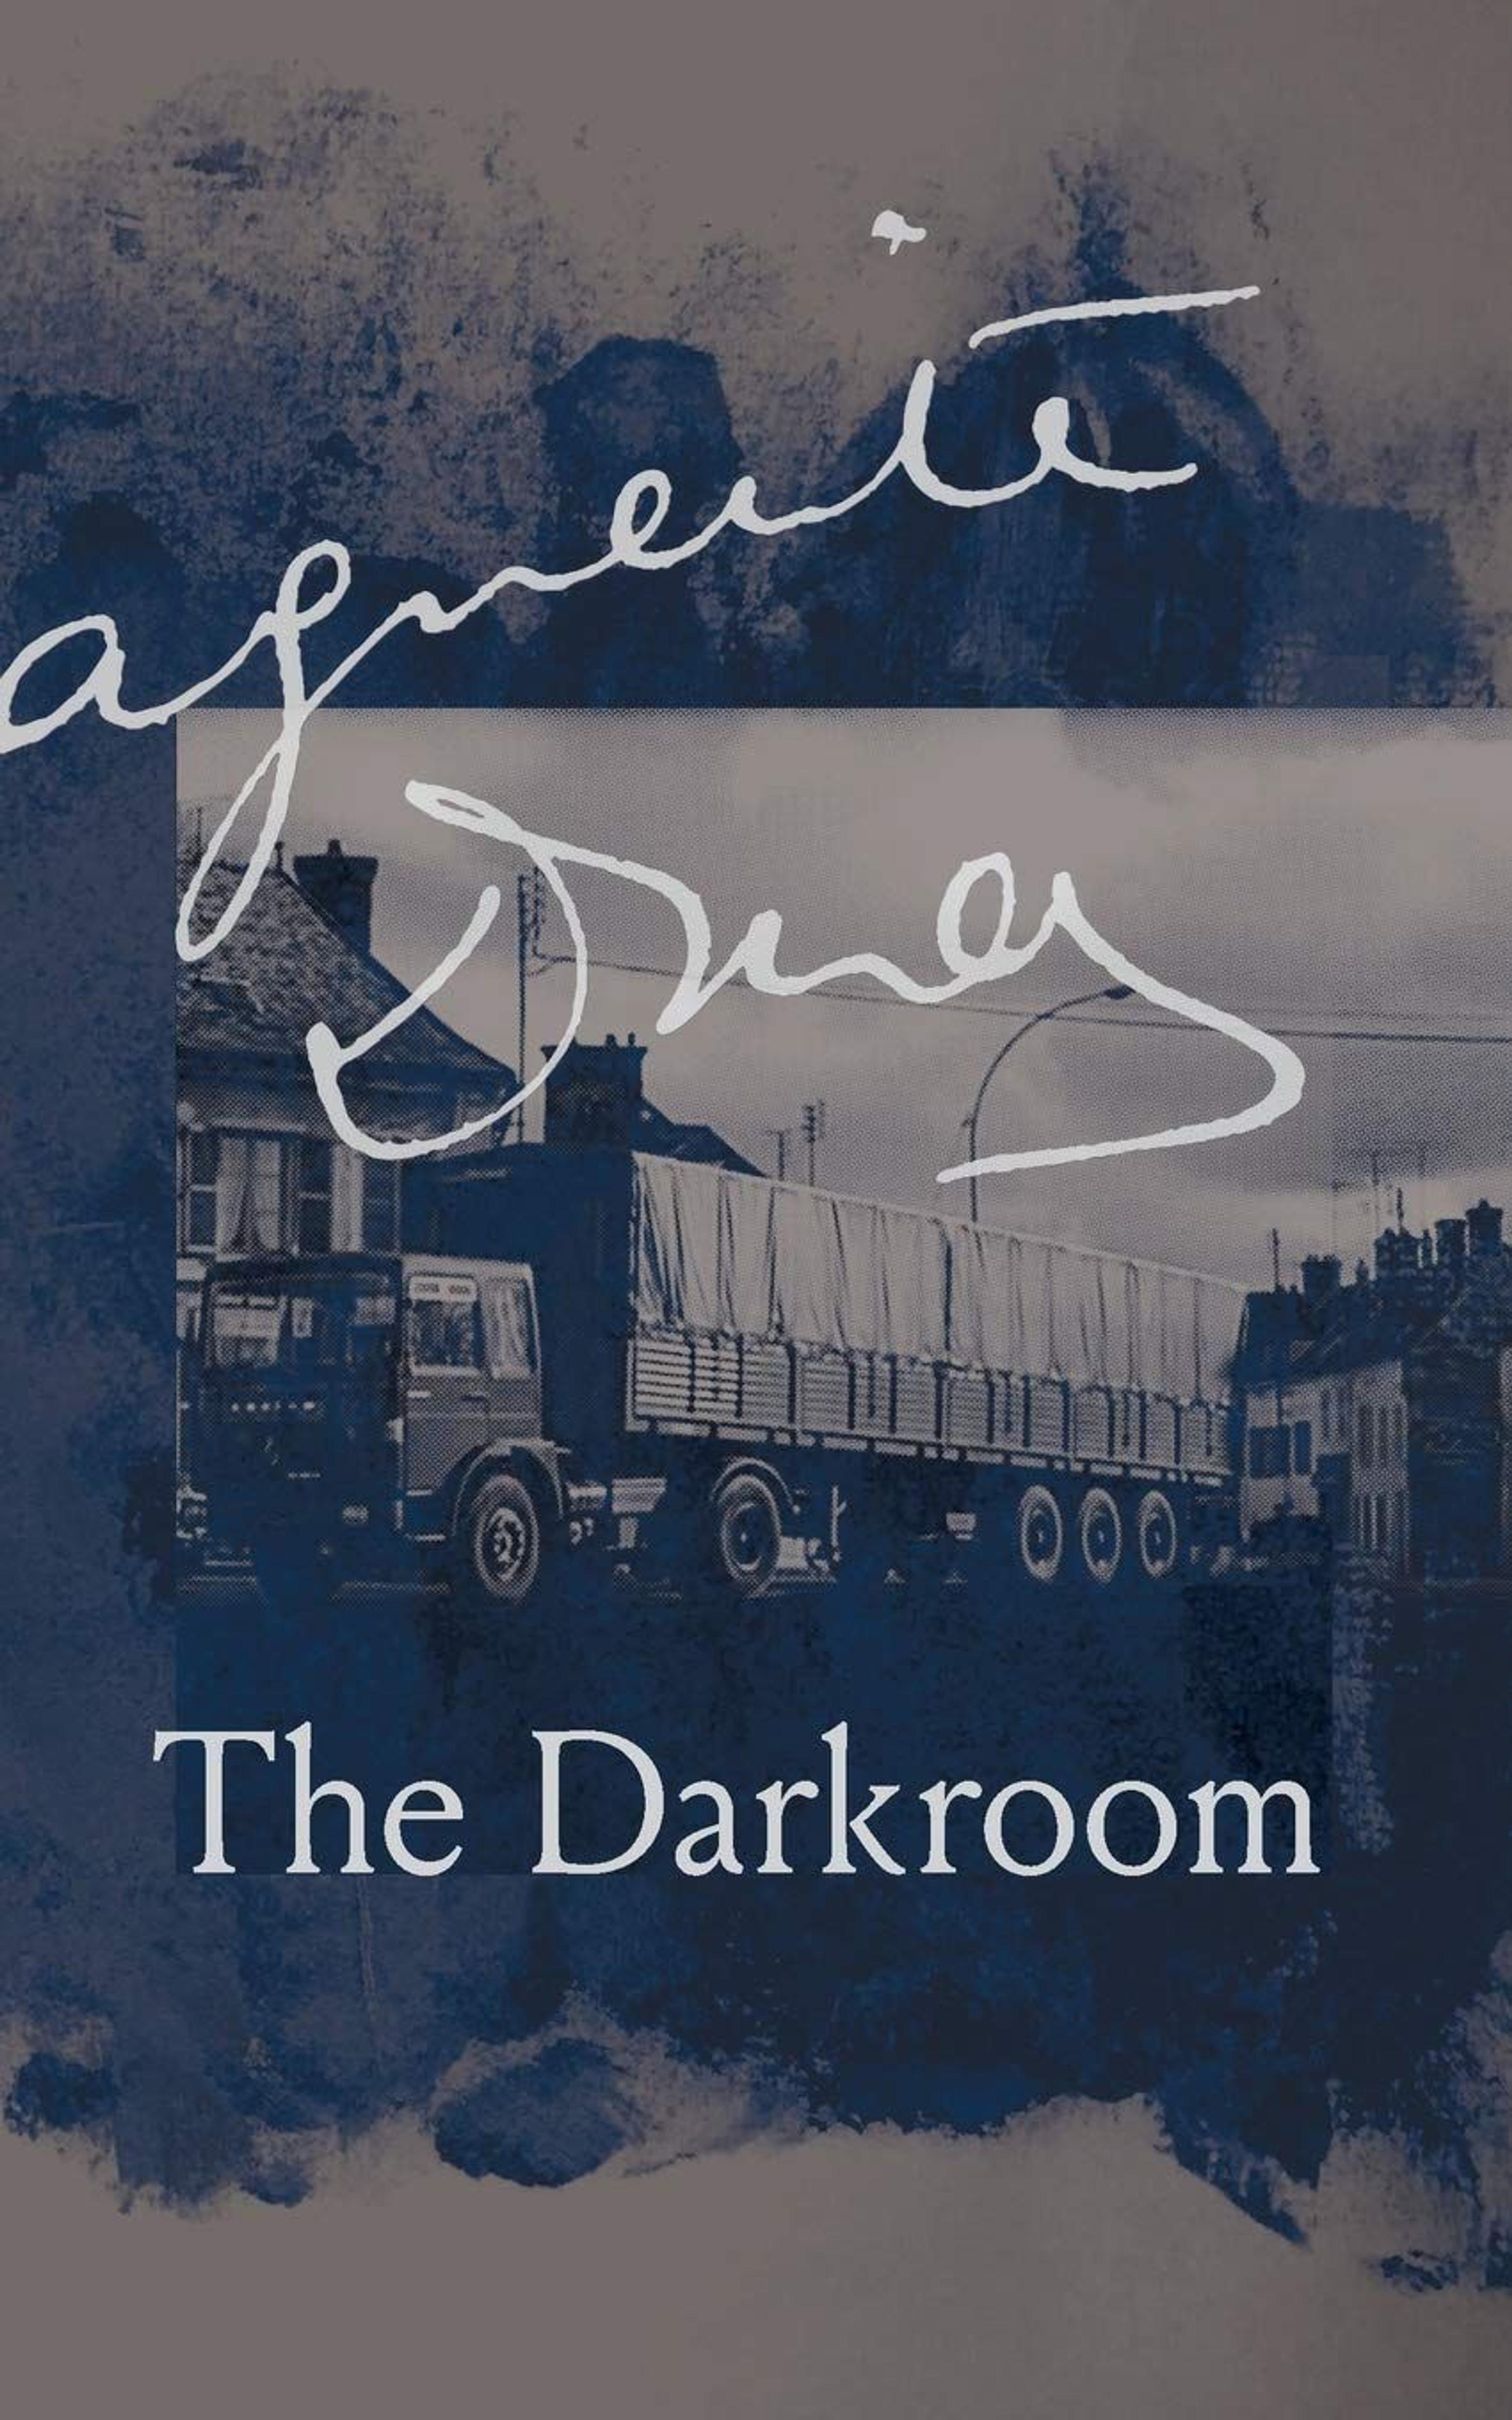 The Need to Talk: On Marguerite Duras’s “The Darkroom”